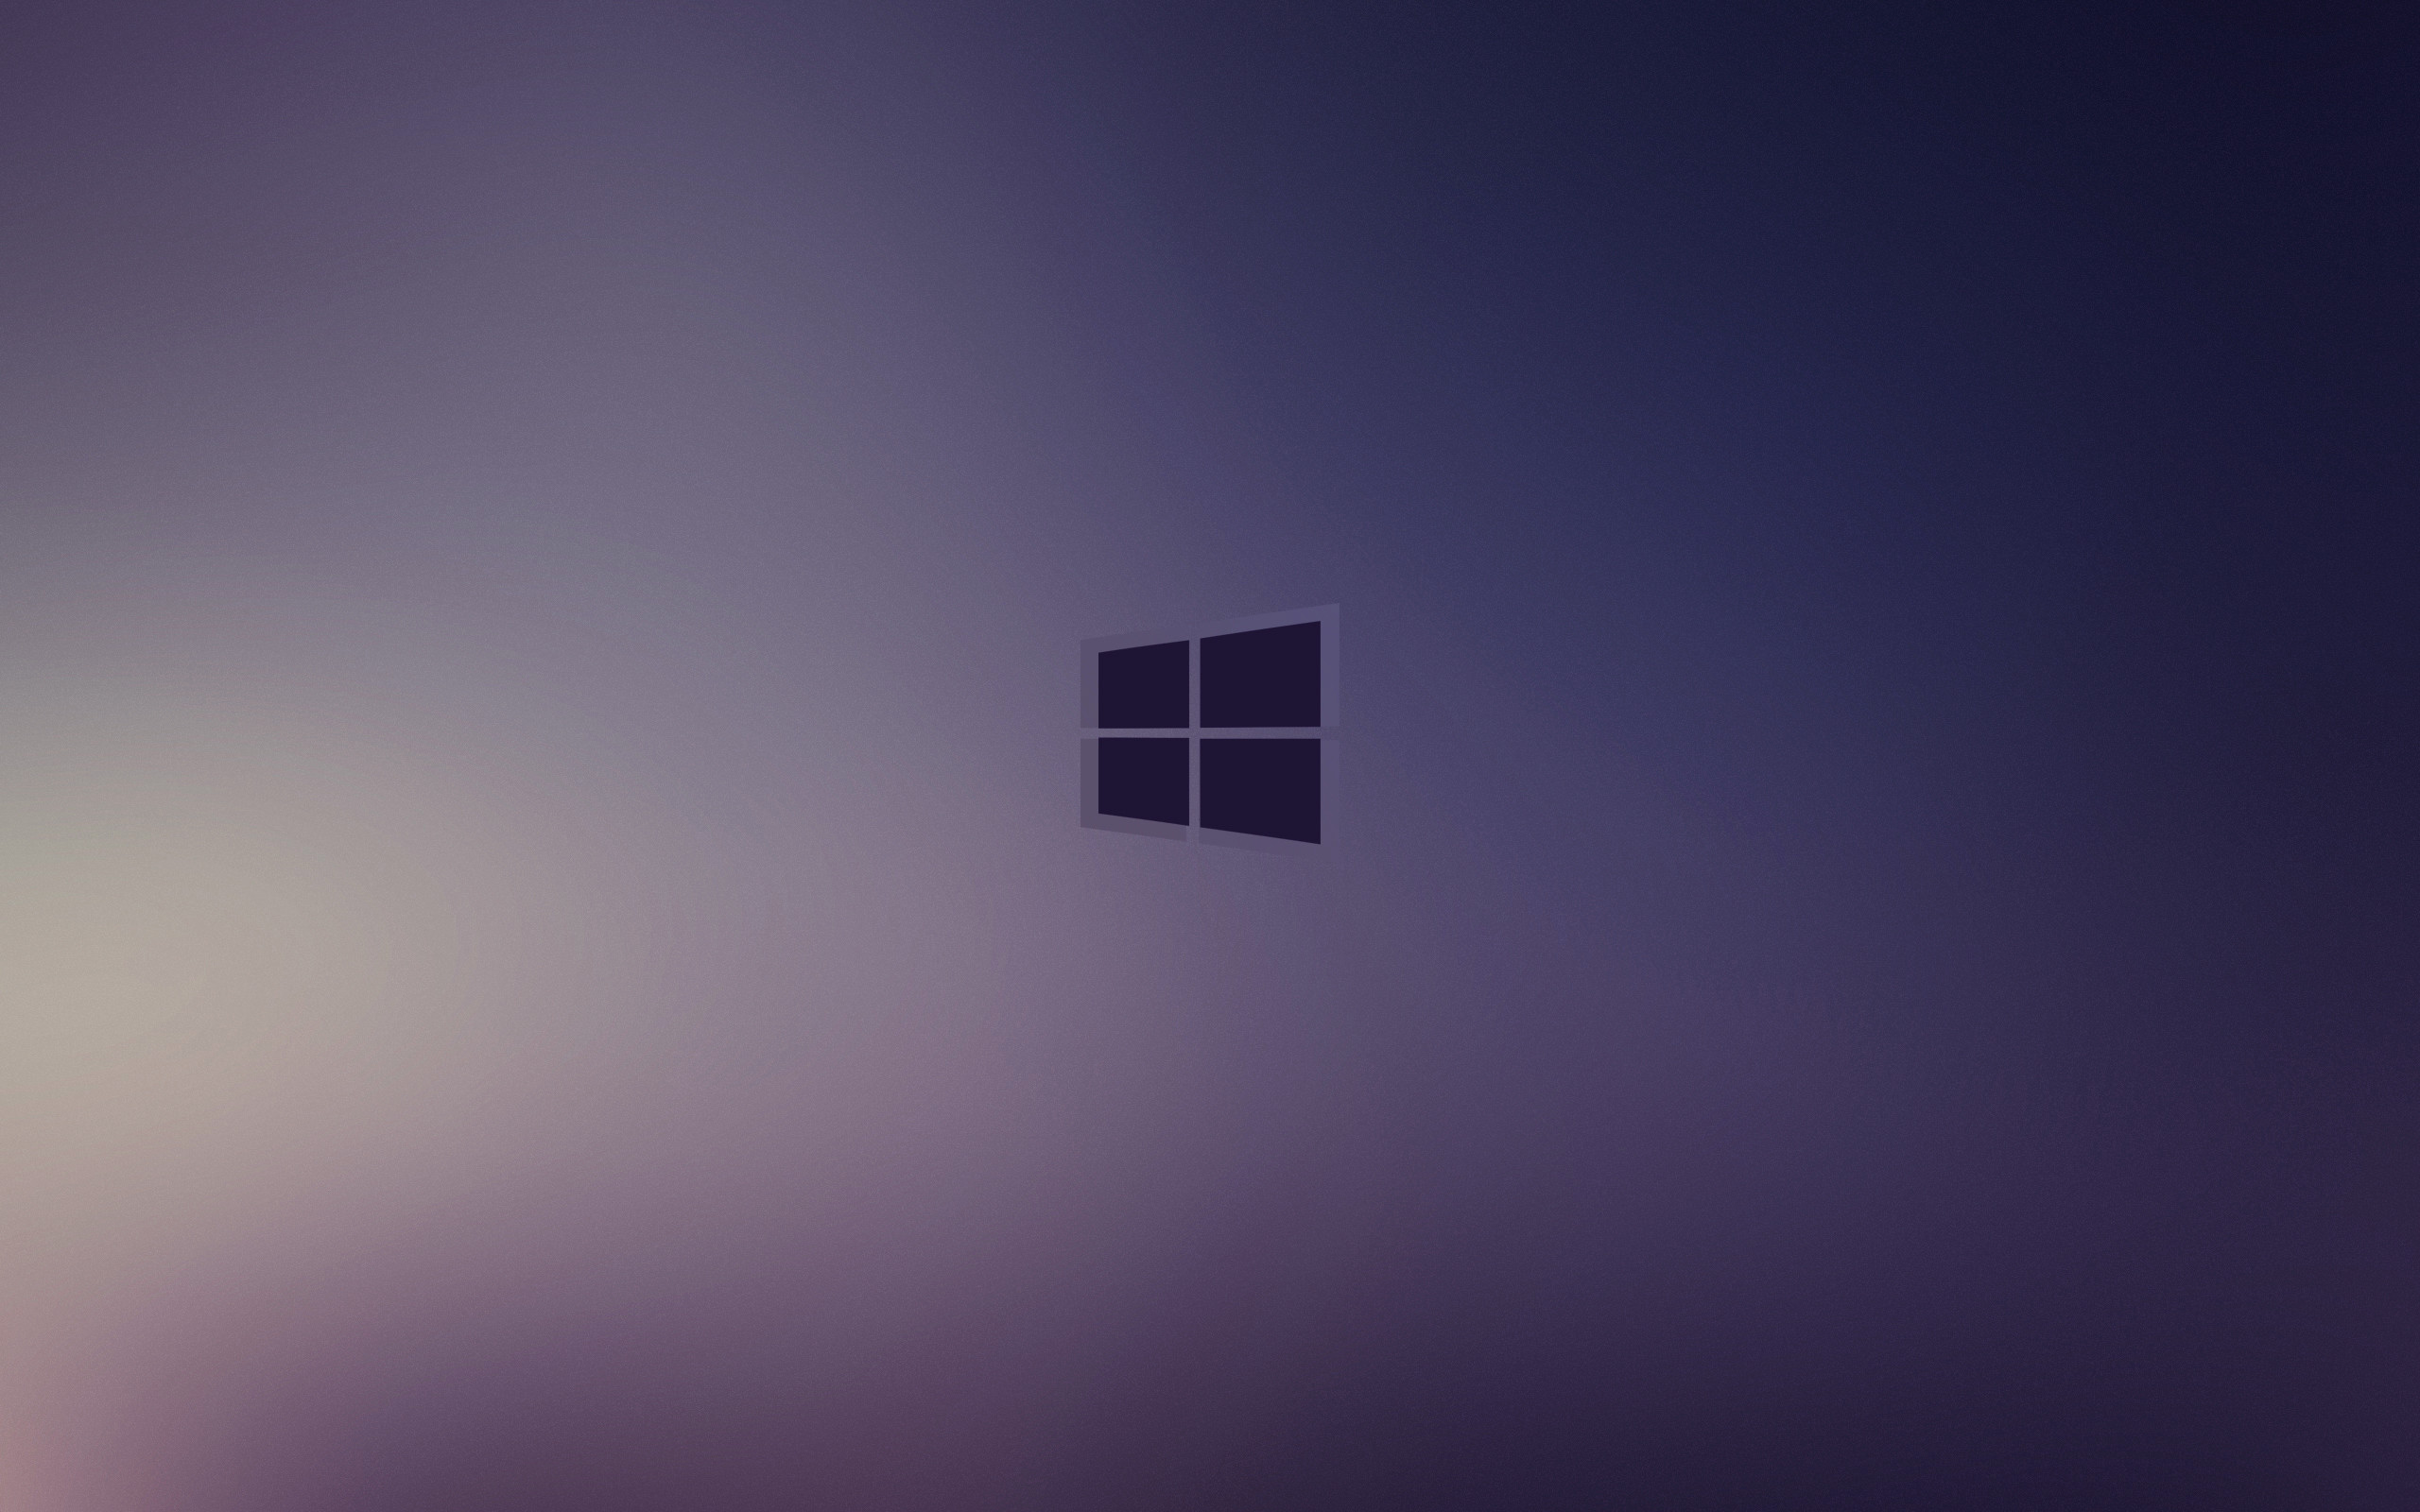 Windows 10 Minimal Wallpapers | HD Wallpapers